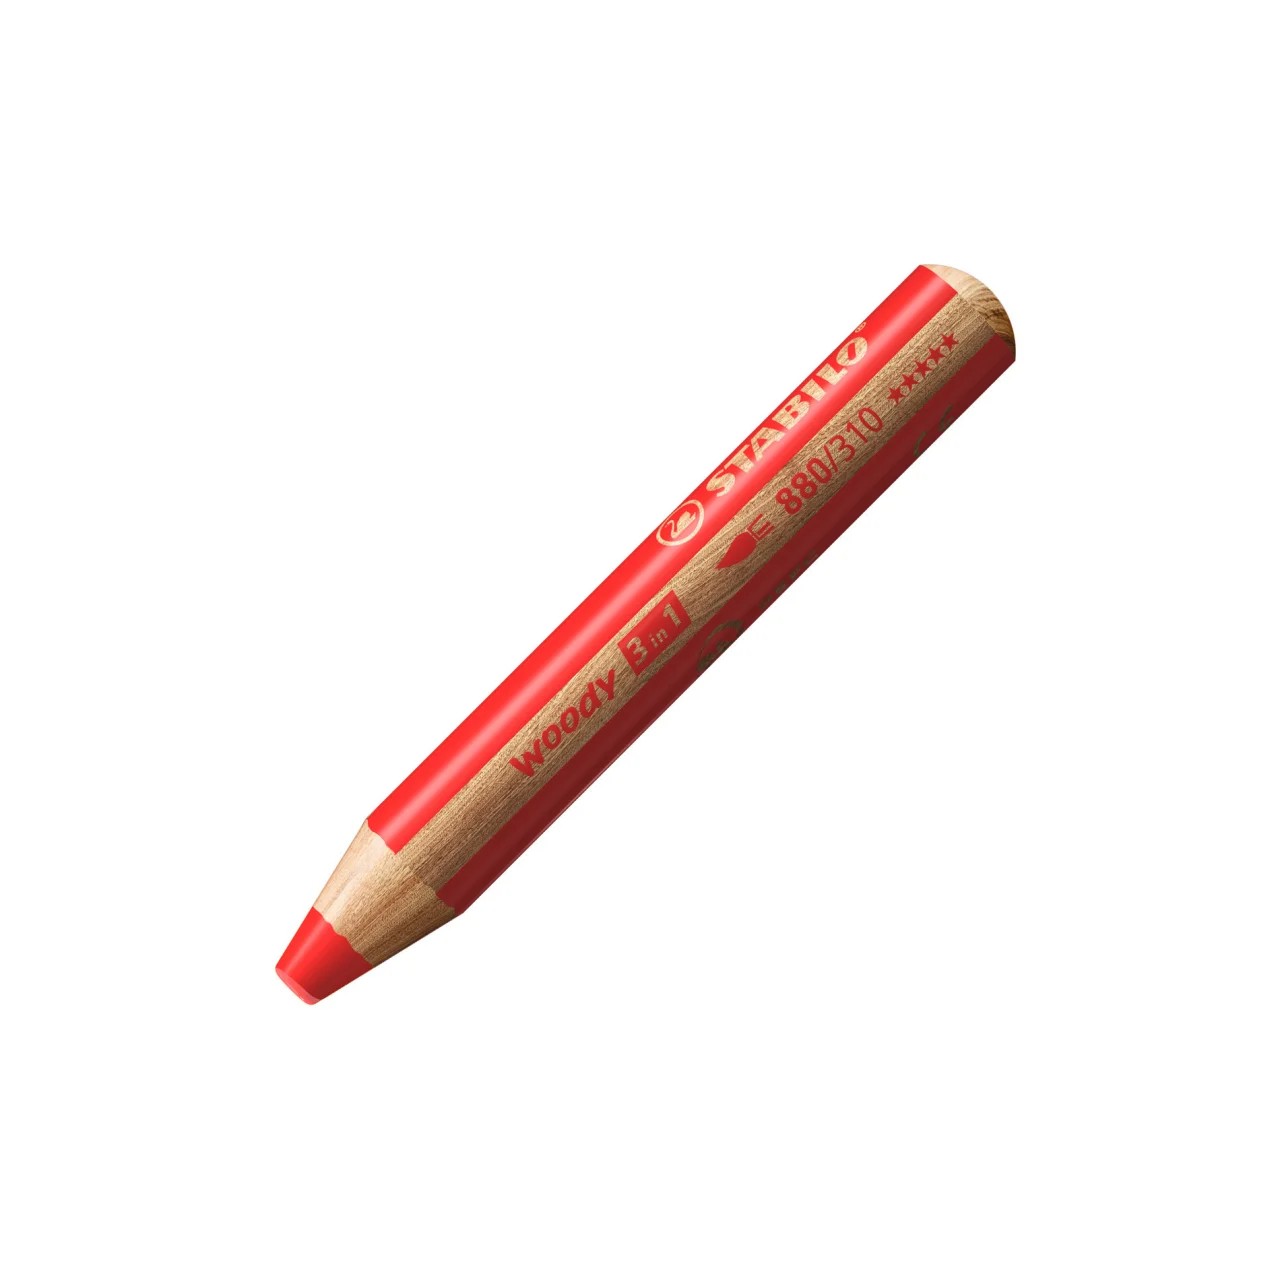 Pochette de 6 crayons de couleur STABILO woody 3 en 1 + taille-crayon